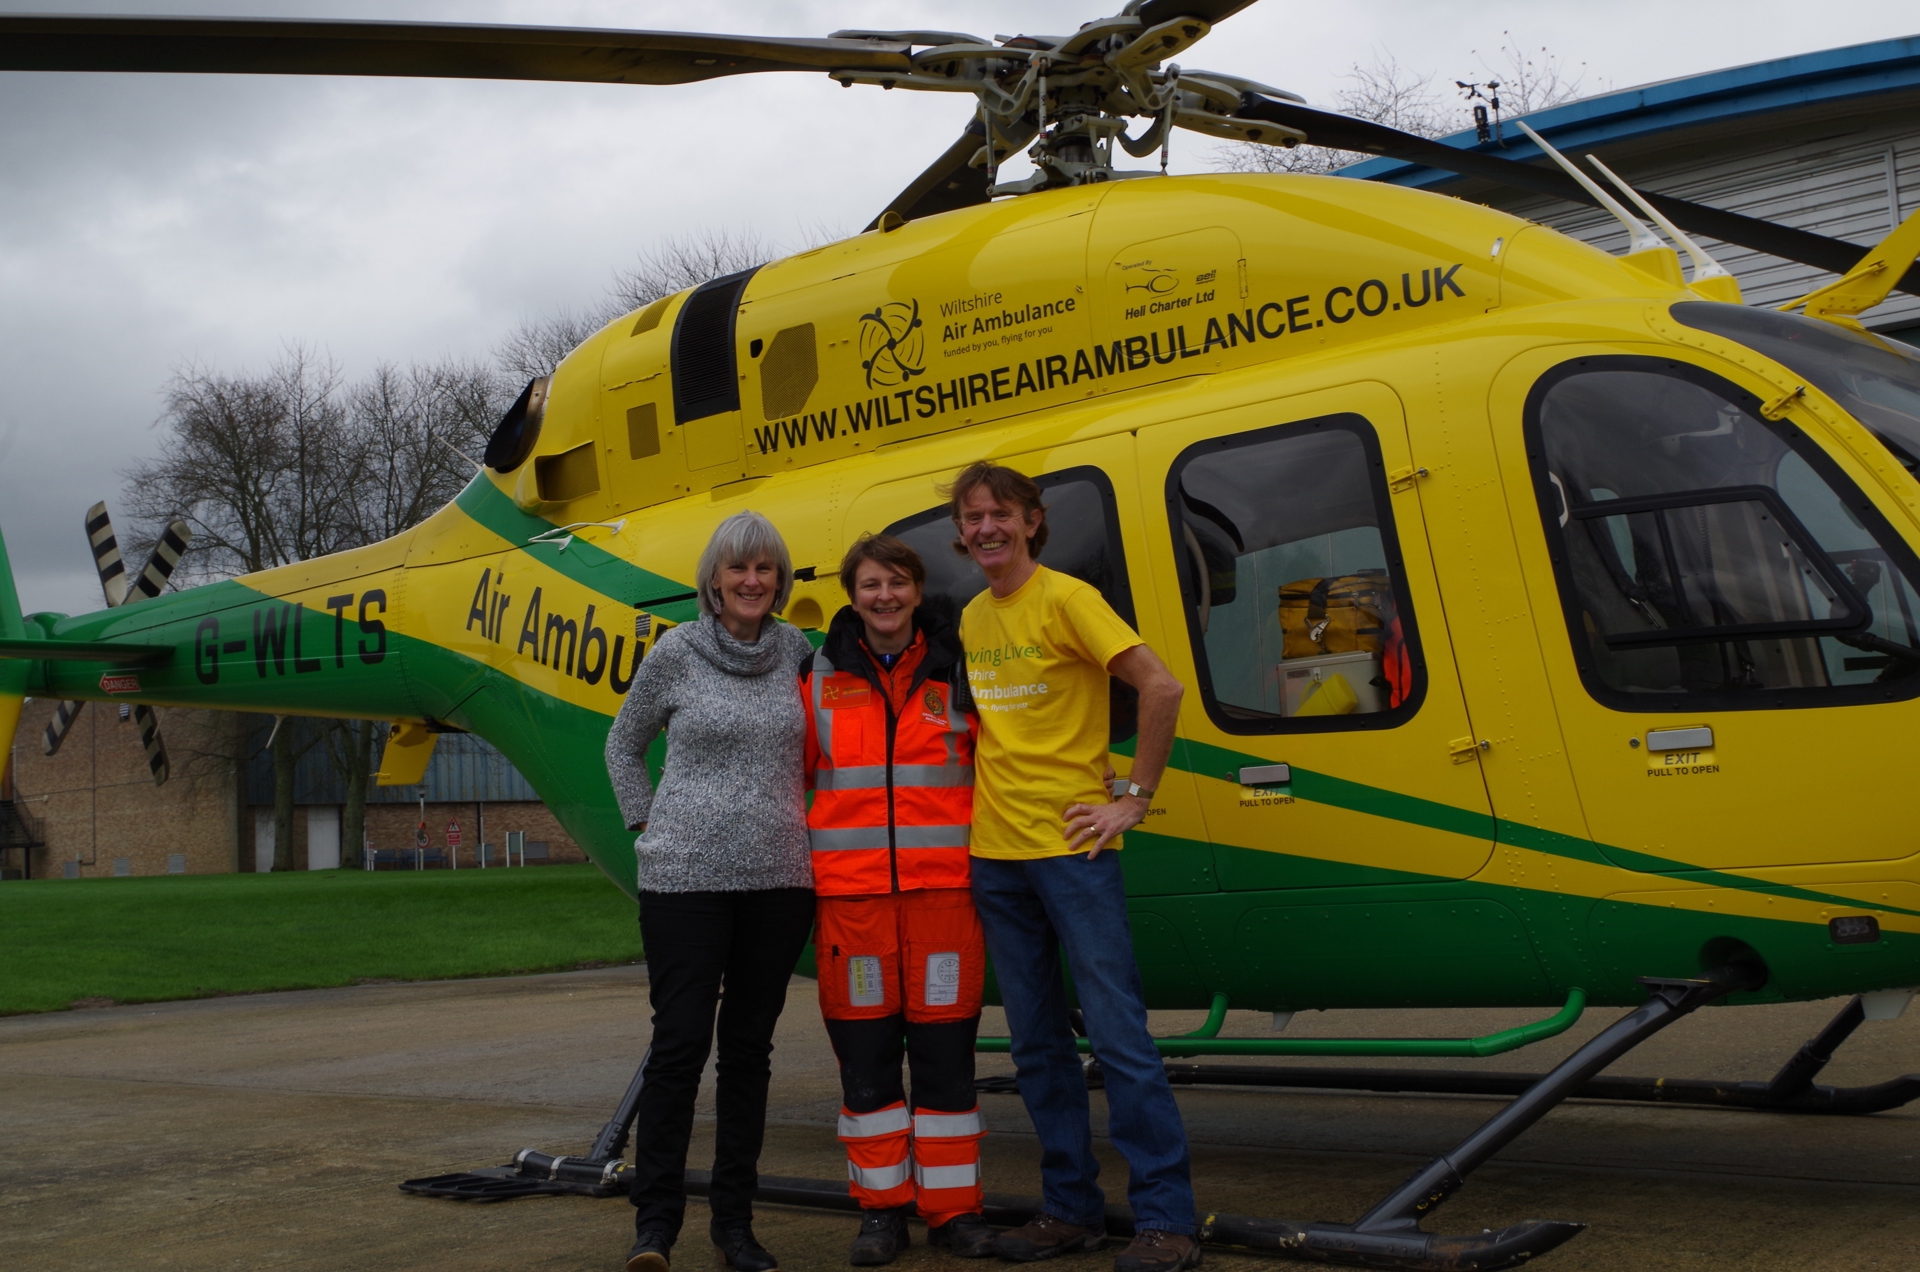 Shaun and Hilary Fleming visiting Wiltshire Air Ambulance